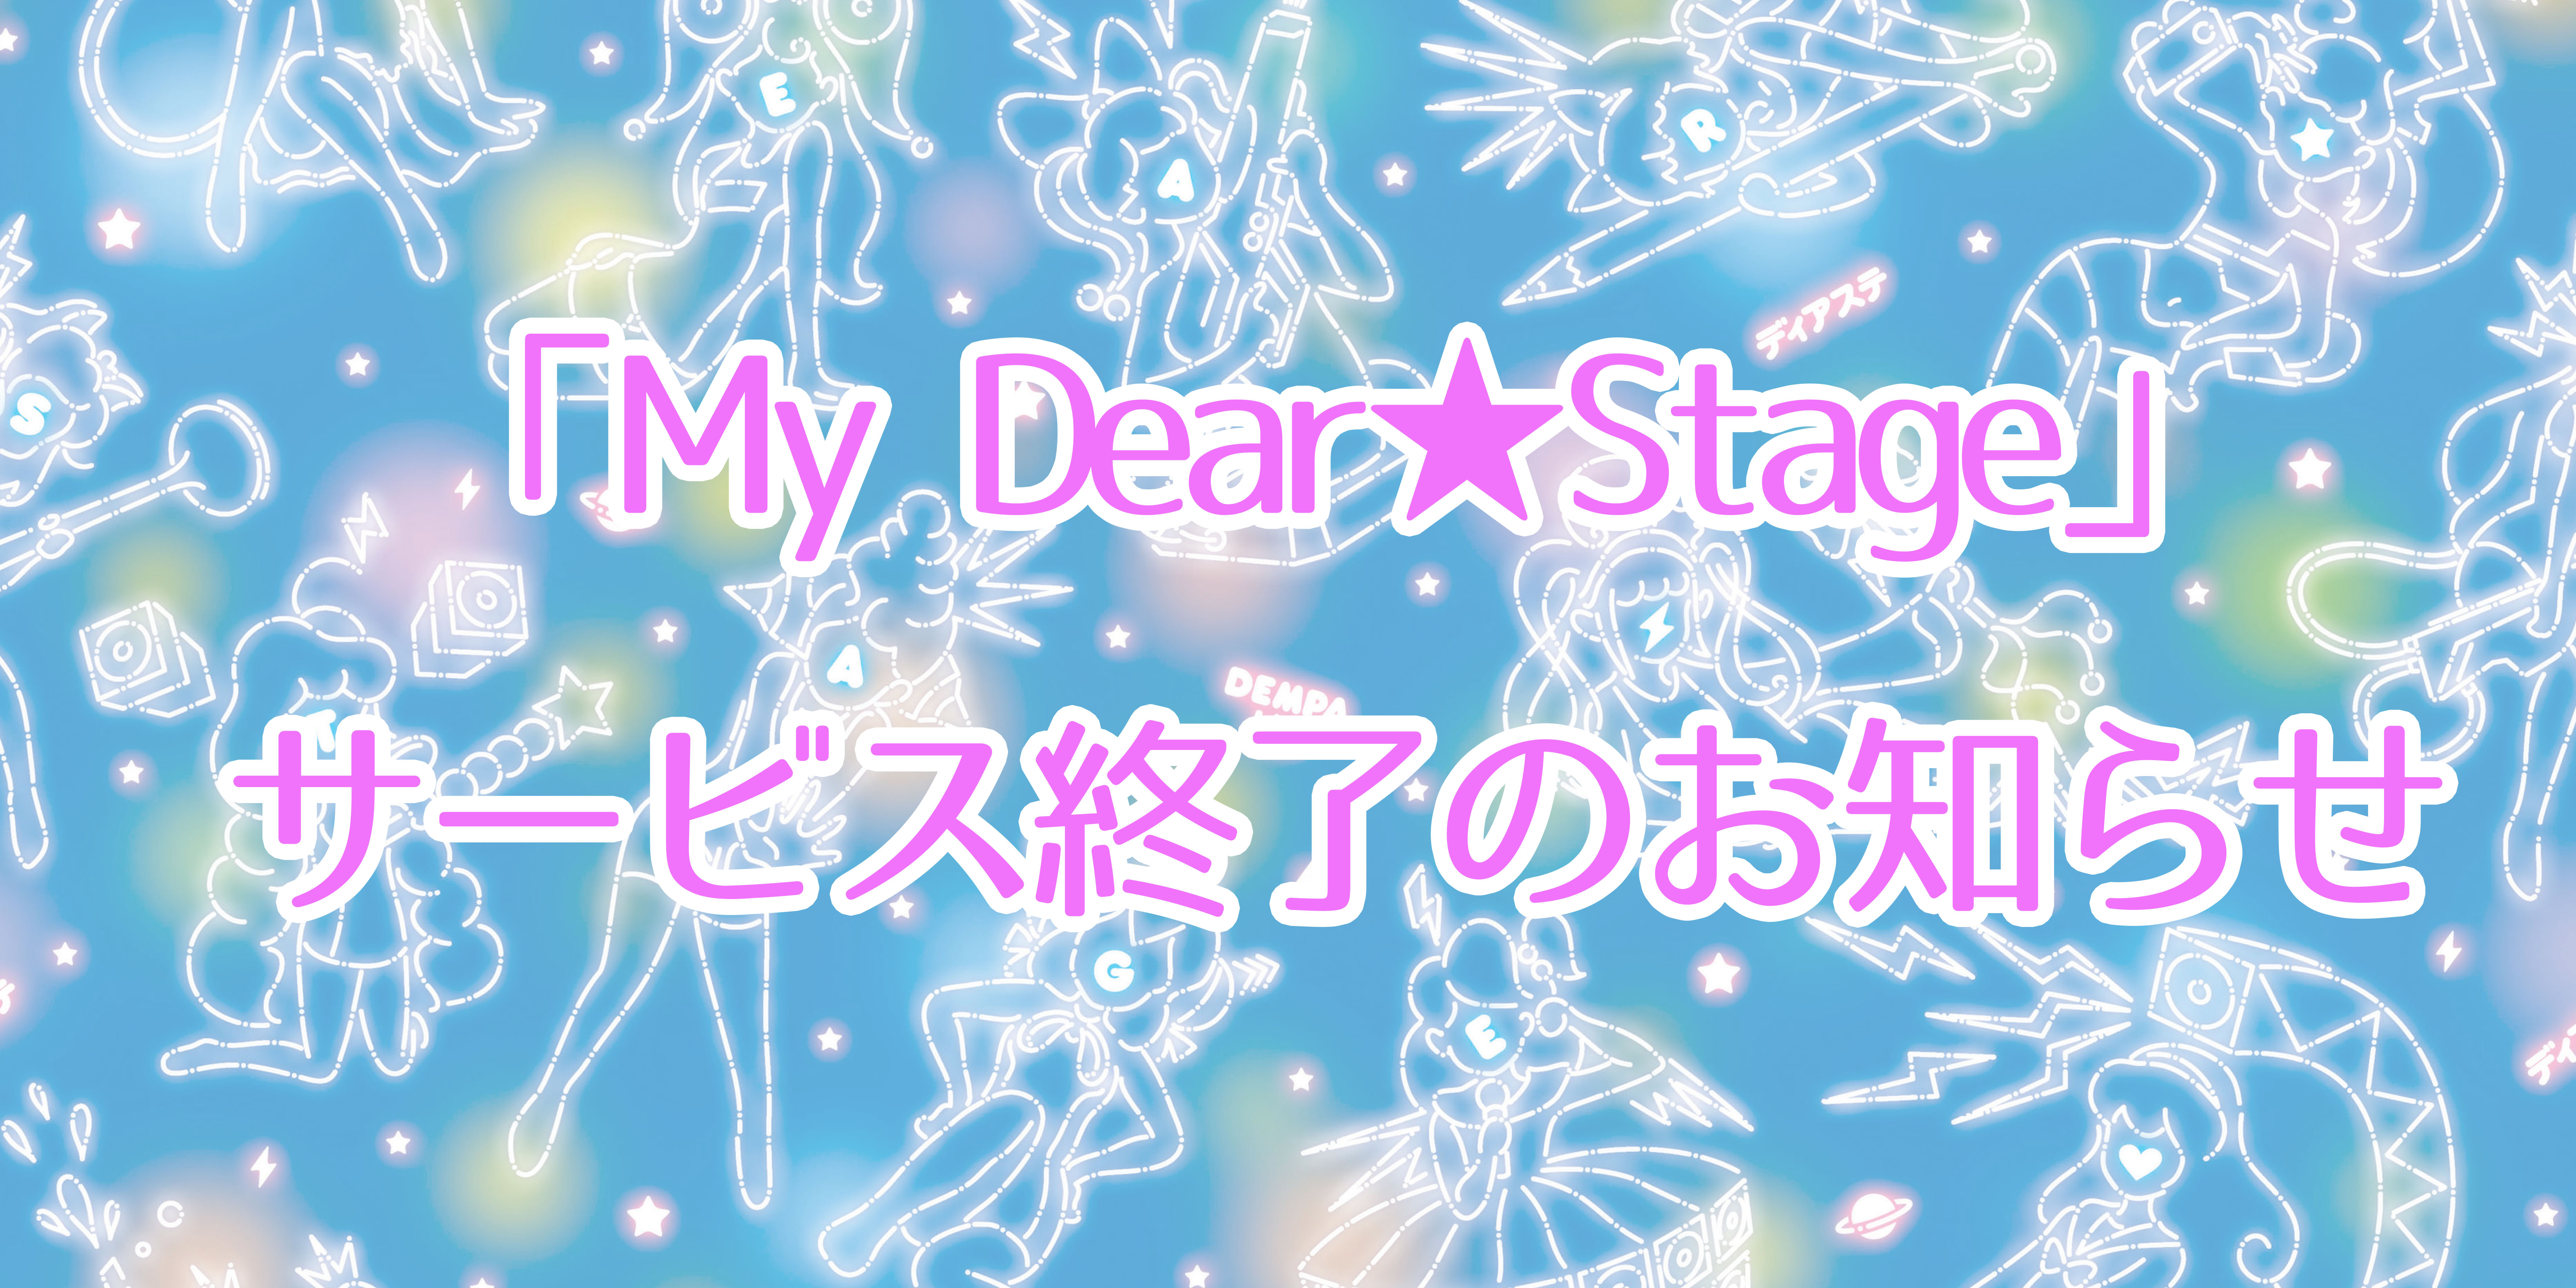 「My Dear★ Stage」終了のお知らせ